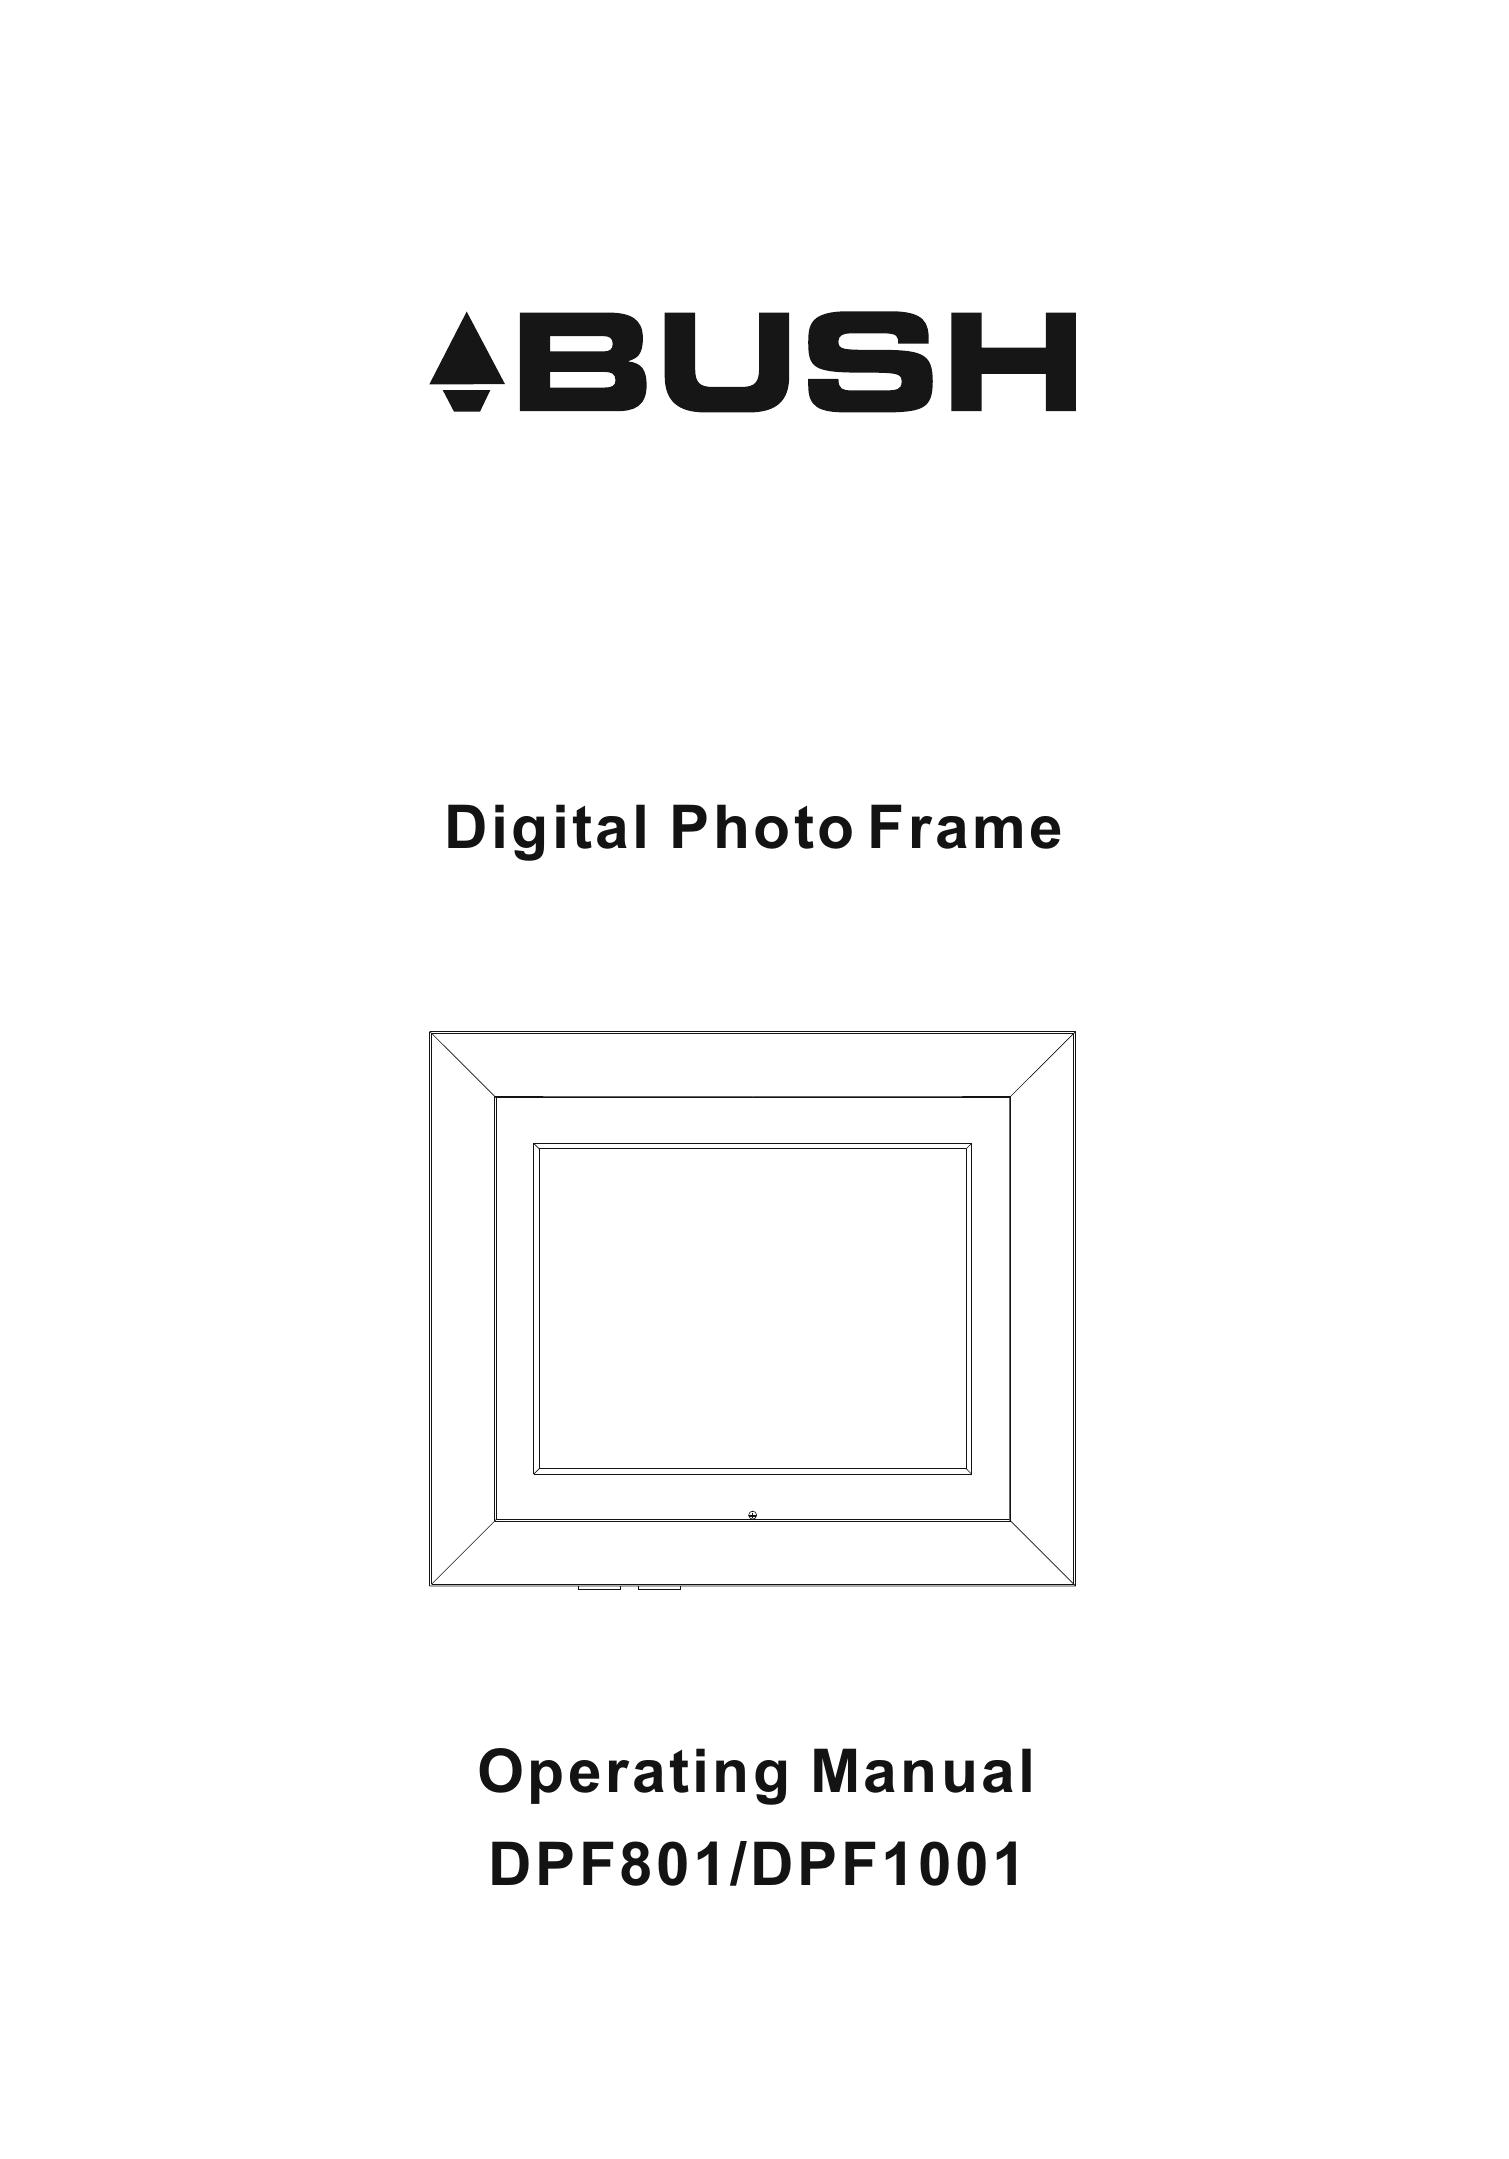 Bush DPF801/DPF1001 Digital Photo Frame User Manual